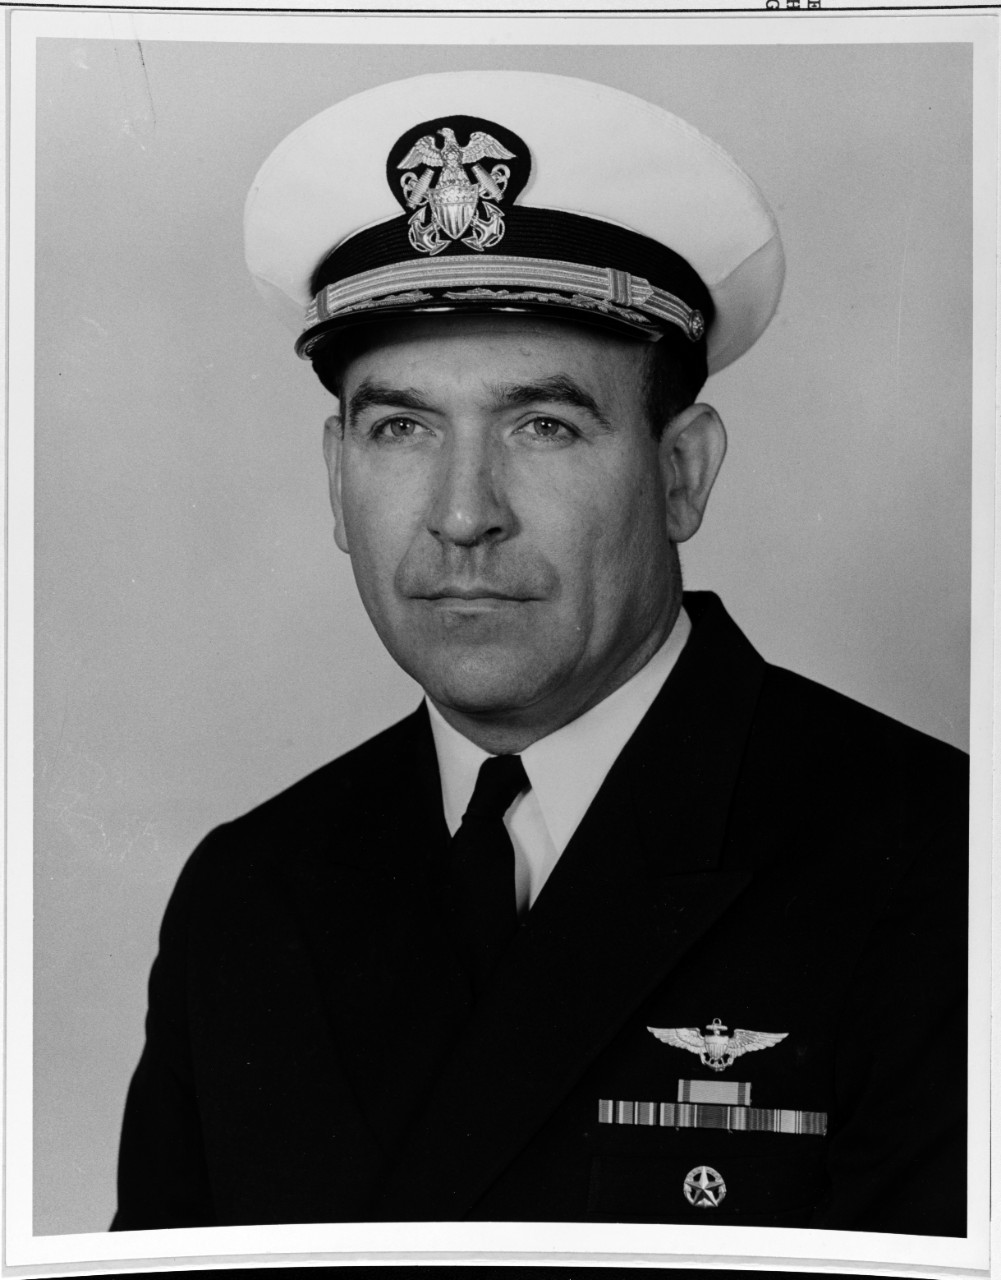 NH 69905 Paul E. Payne, Captain, USN